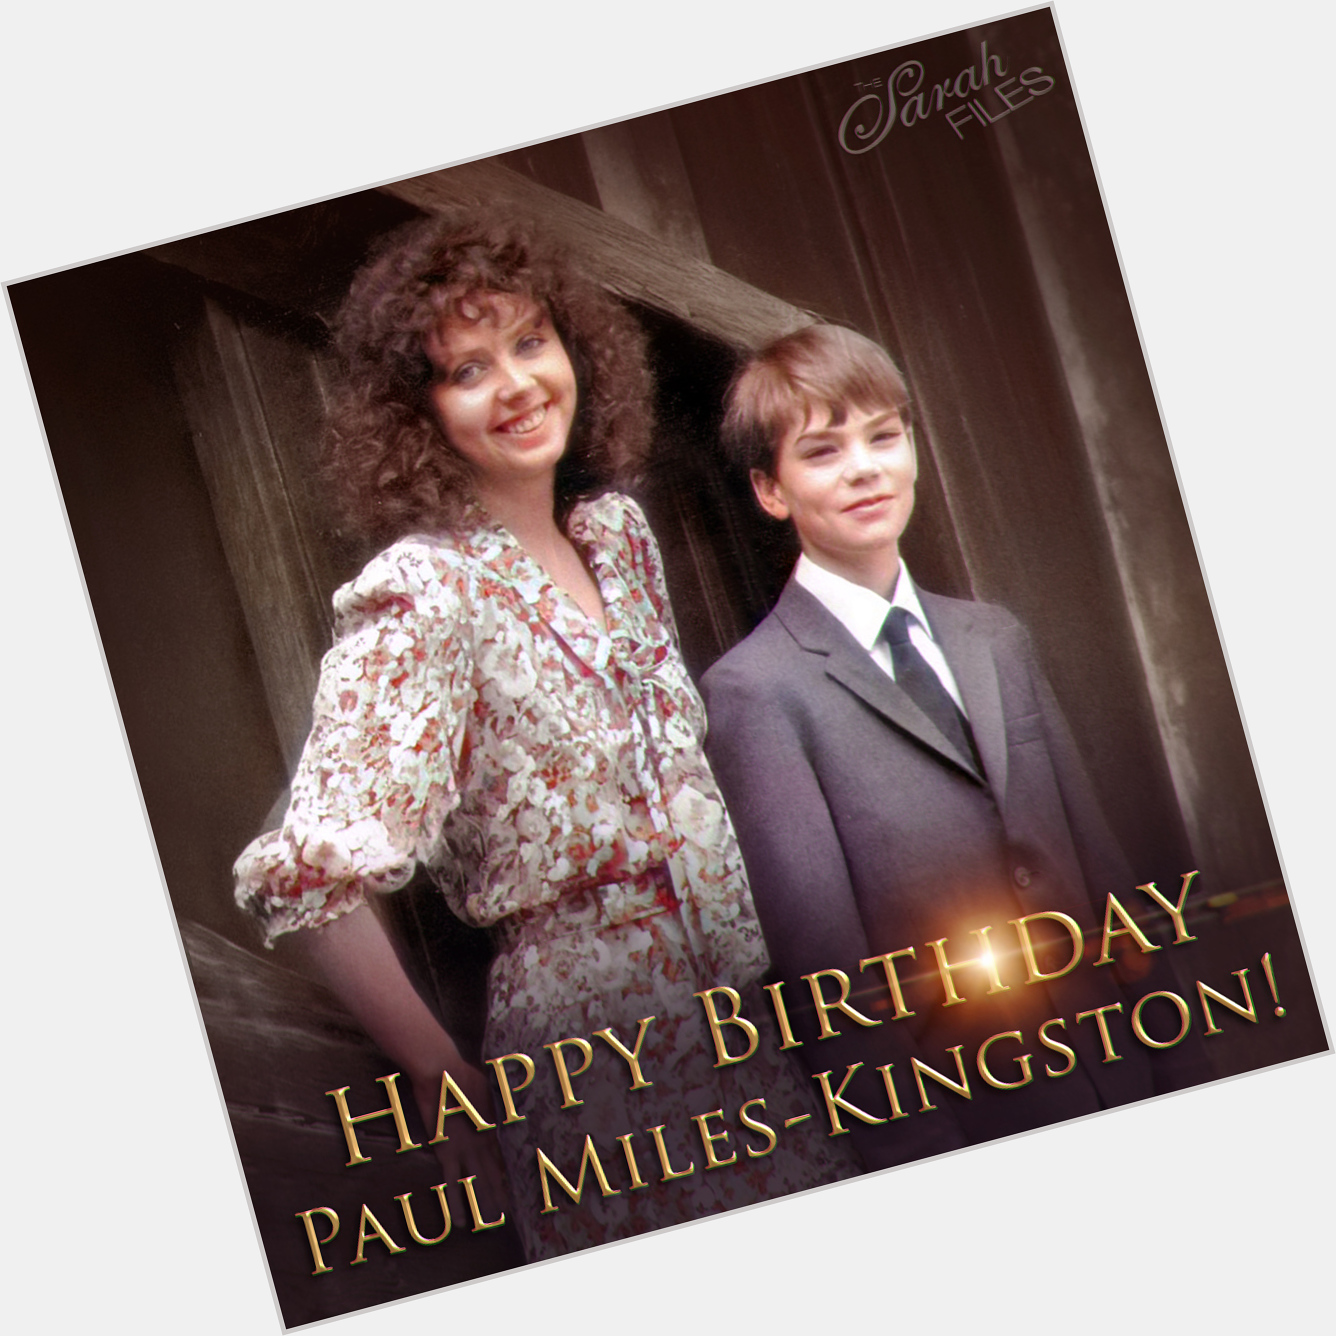 Happy 51st birthday, Paul Miles-Kingston!      